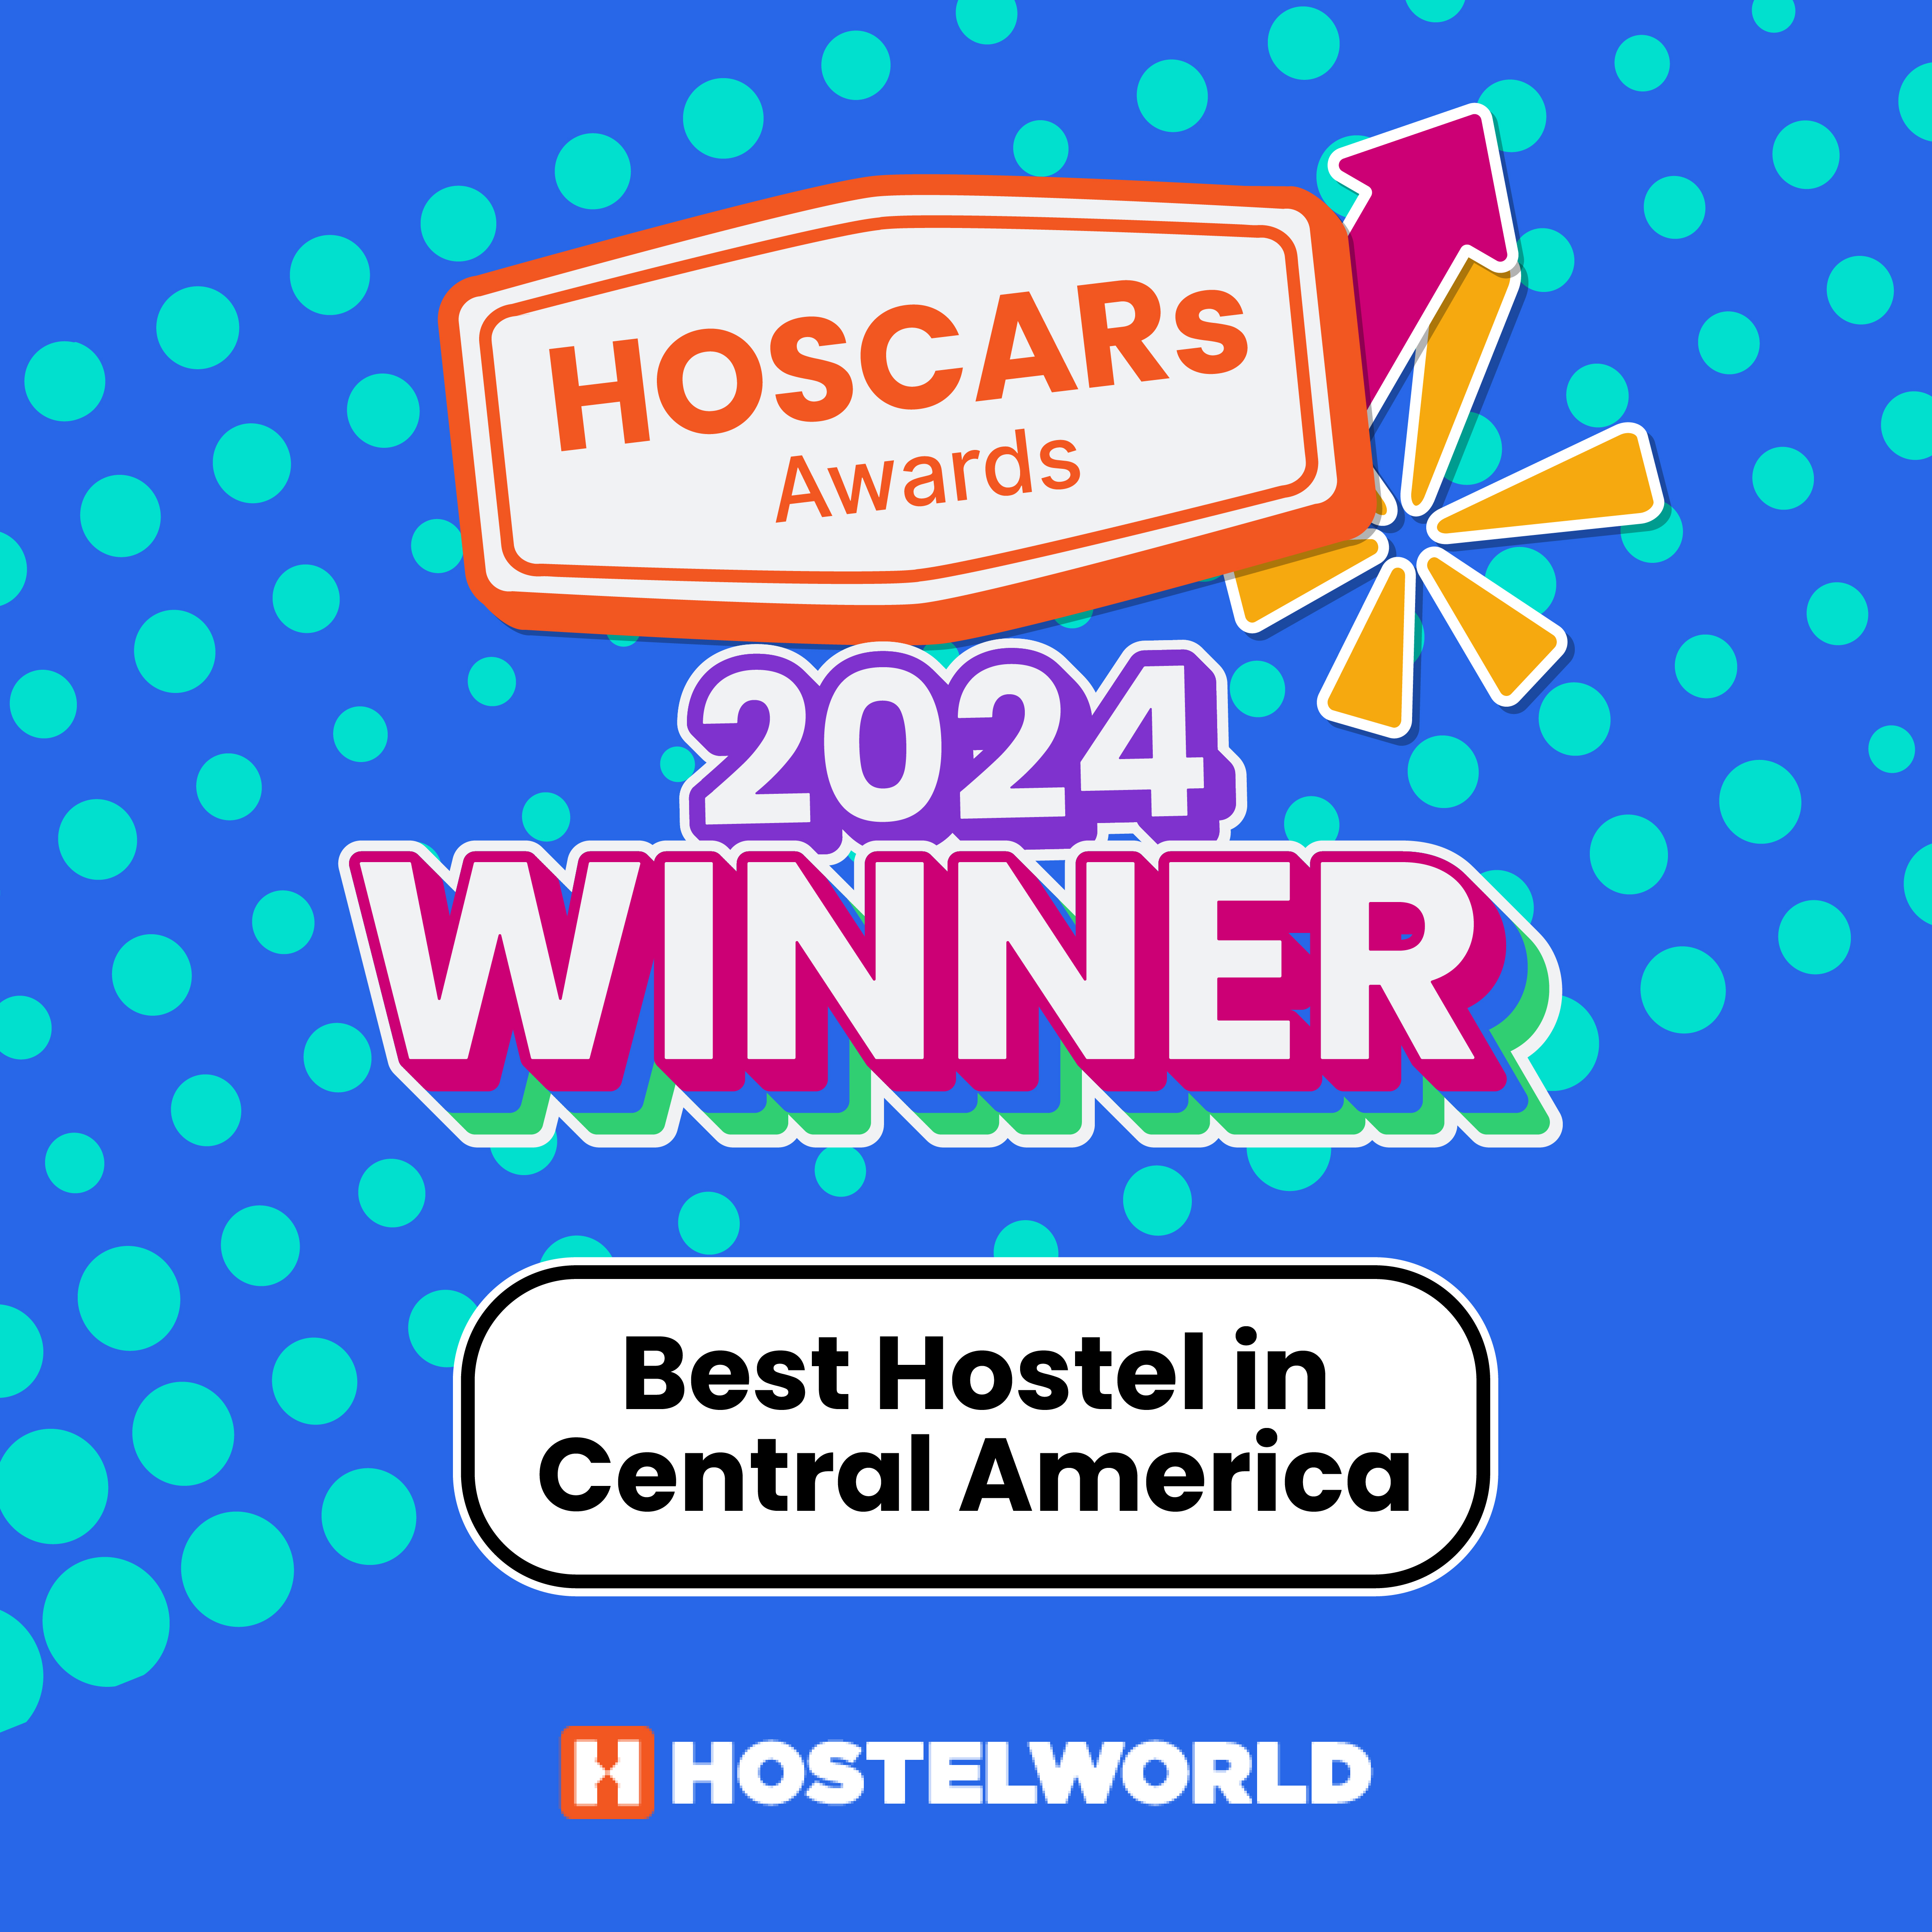 Best Hostel in Central America